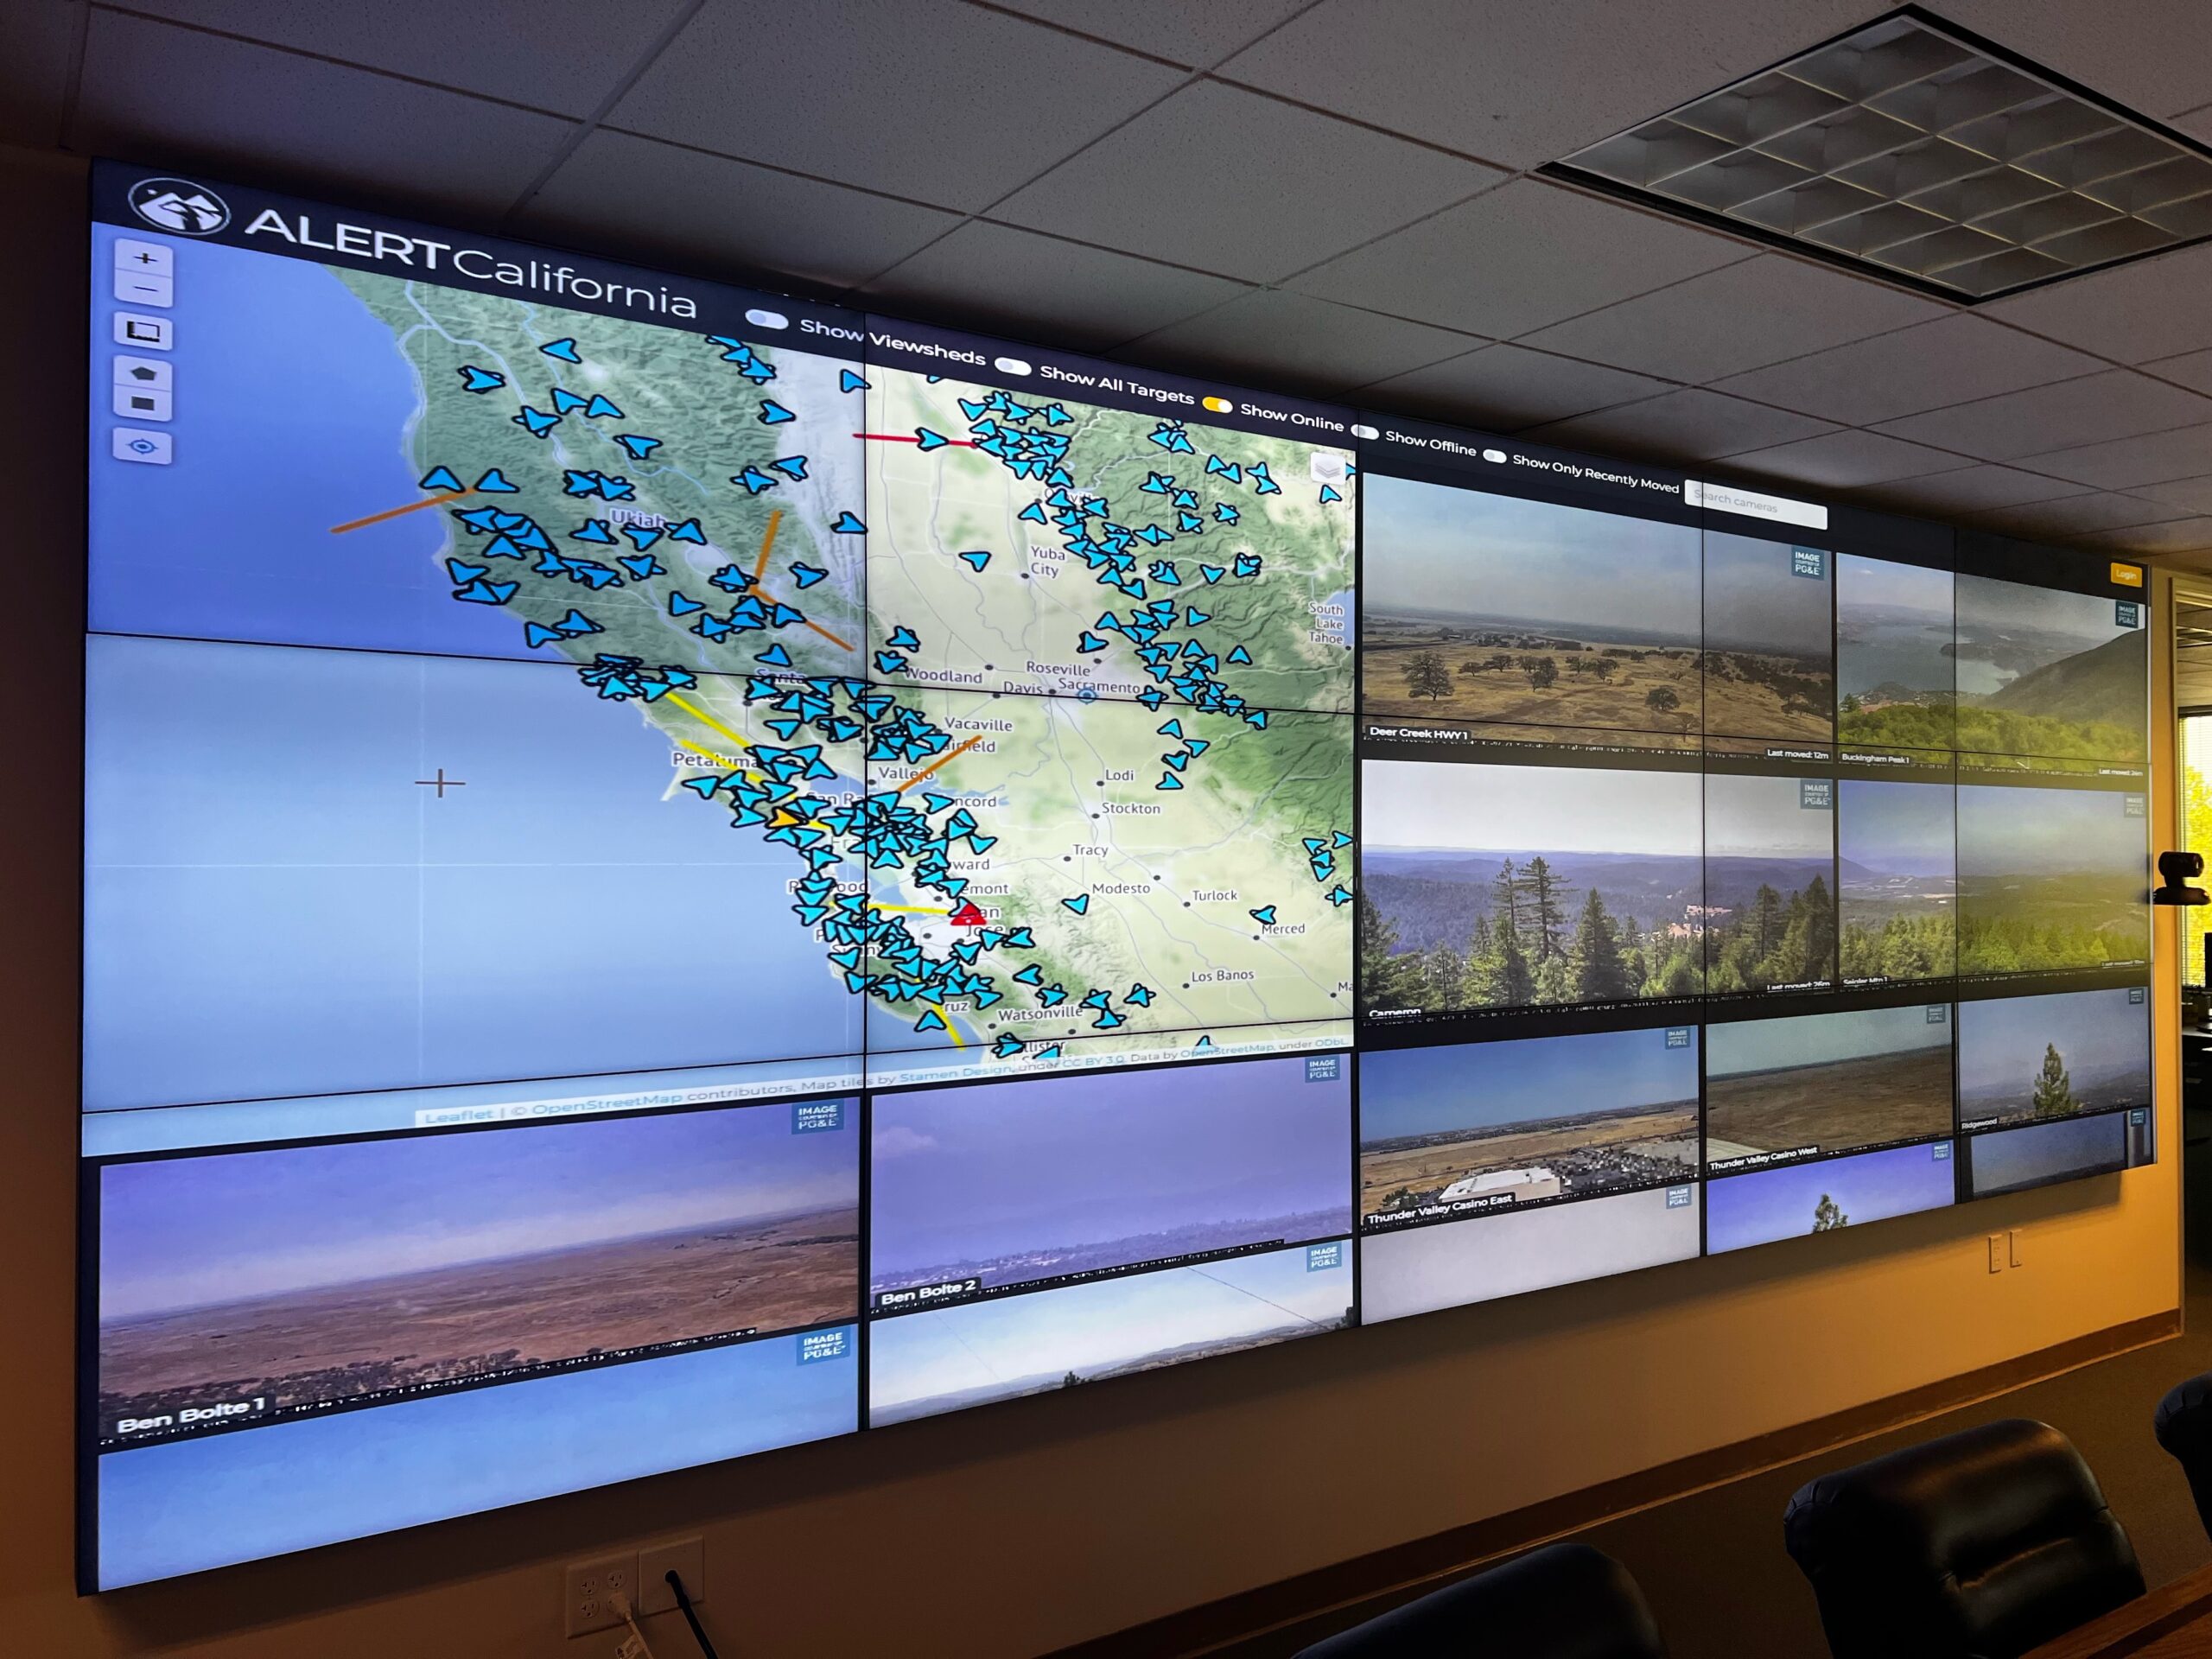 Content displayed in ALERTCalifornia Sacramento Command and Control Center. Image credit: ALERTCalifornia | UC San Diego